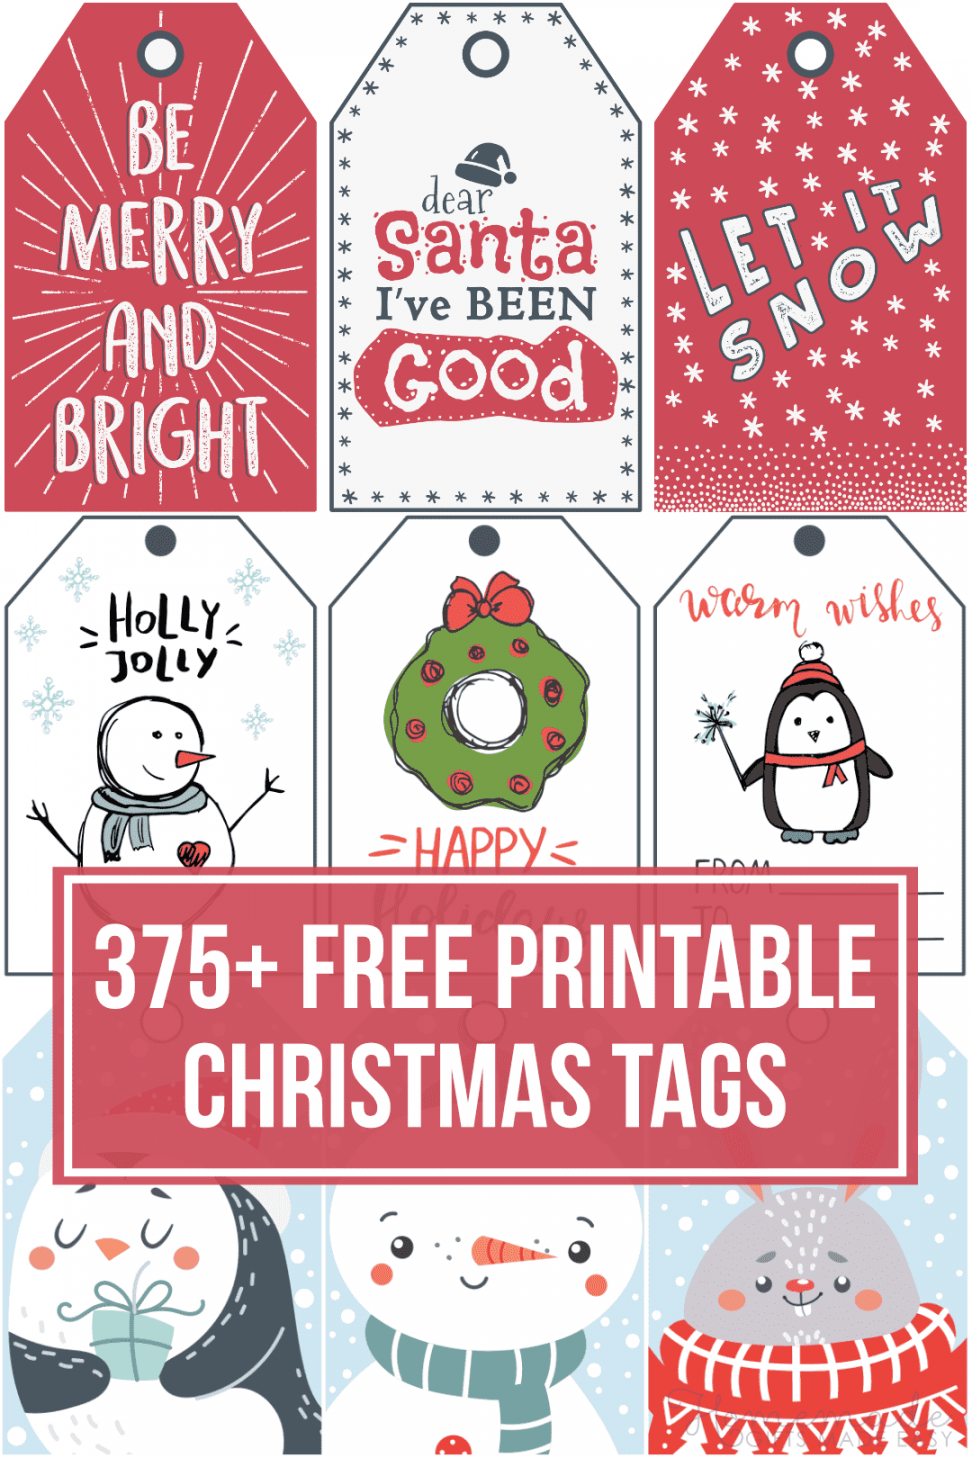 + Free Printable Christmas Tags for your Holiday Gifts - FREE Printables - Christmas Gift Tags Printable Free